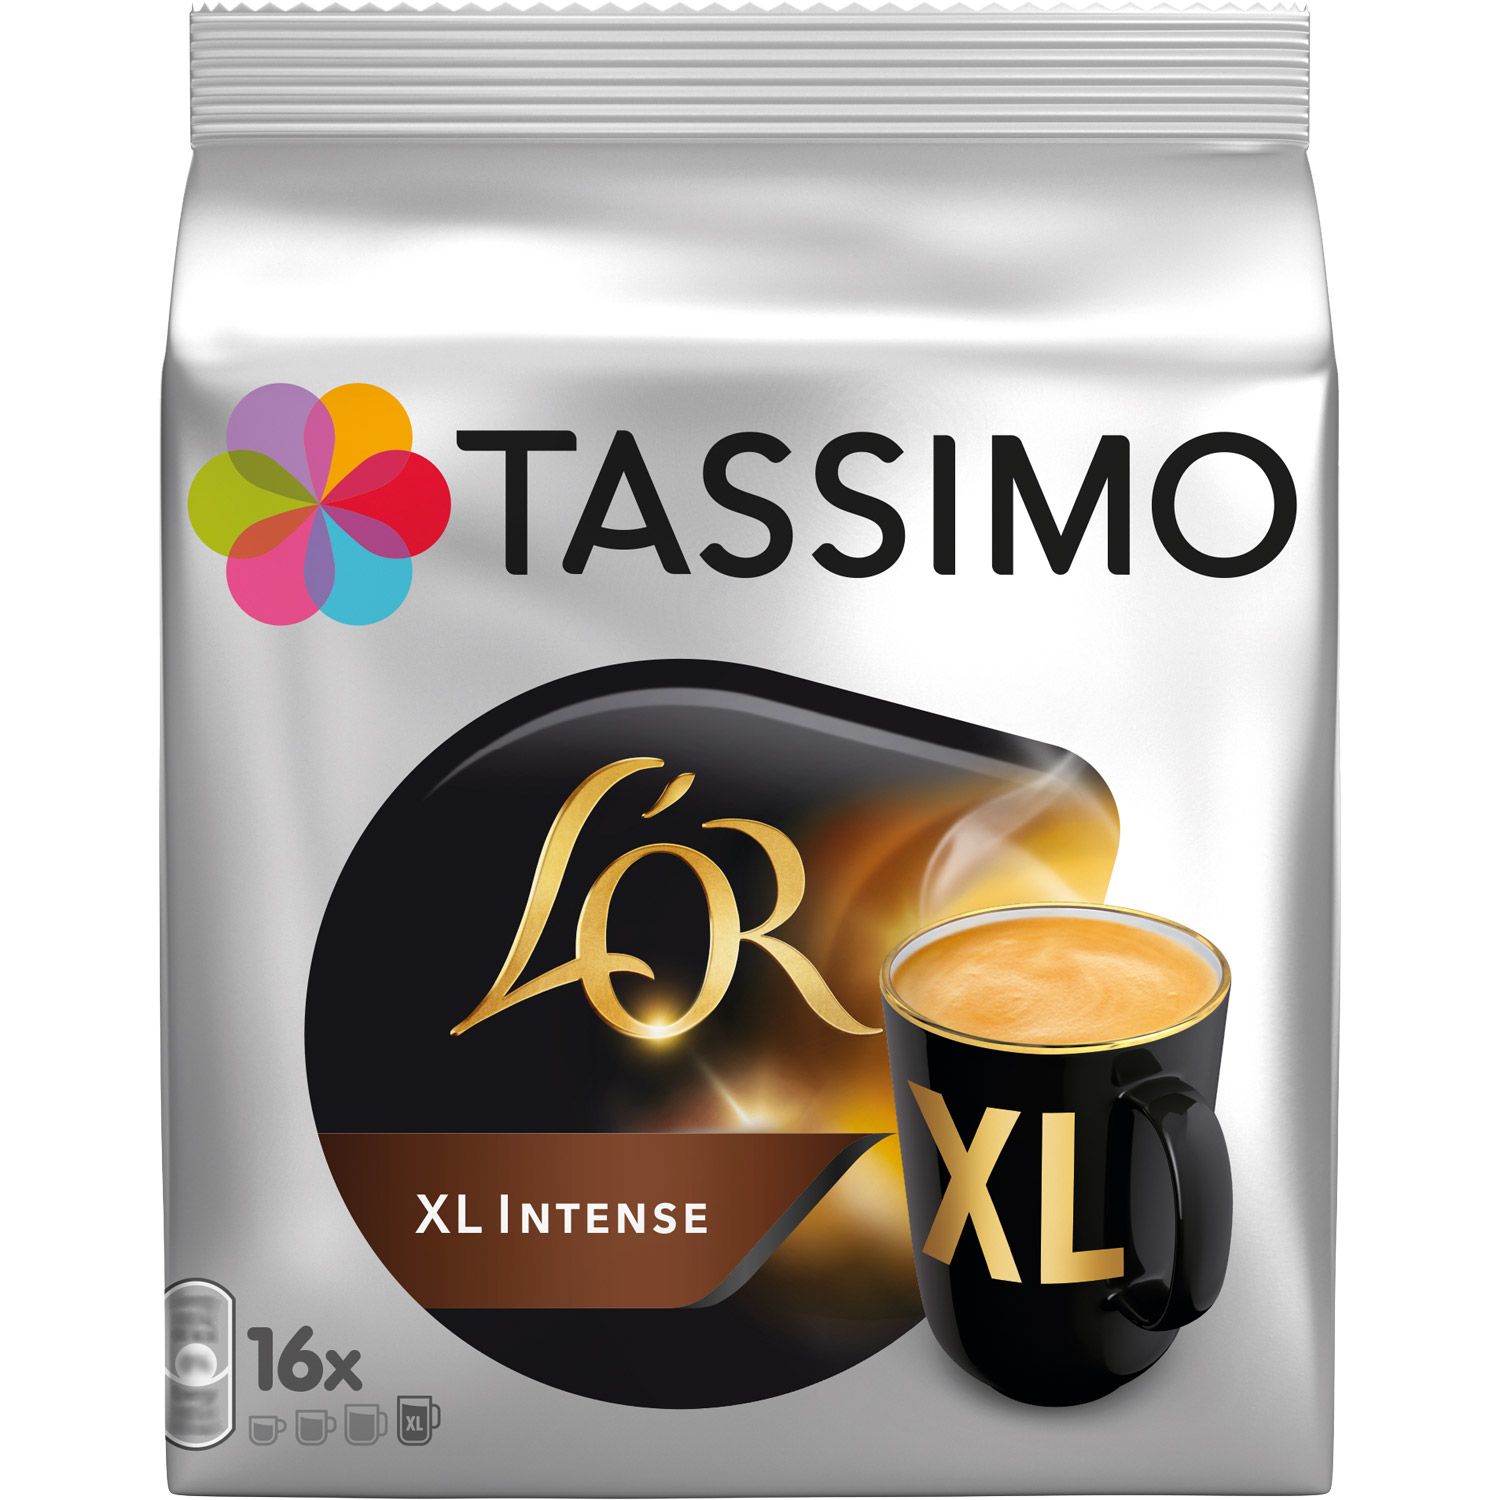 TASSIMO Dosettes de café L'Or XL classique 16 dosettes 136g pas